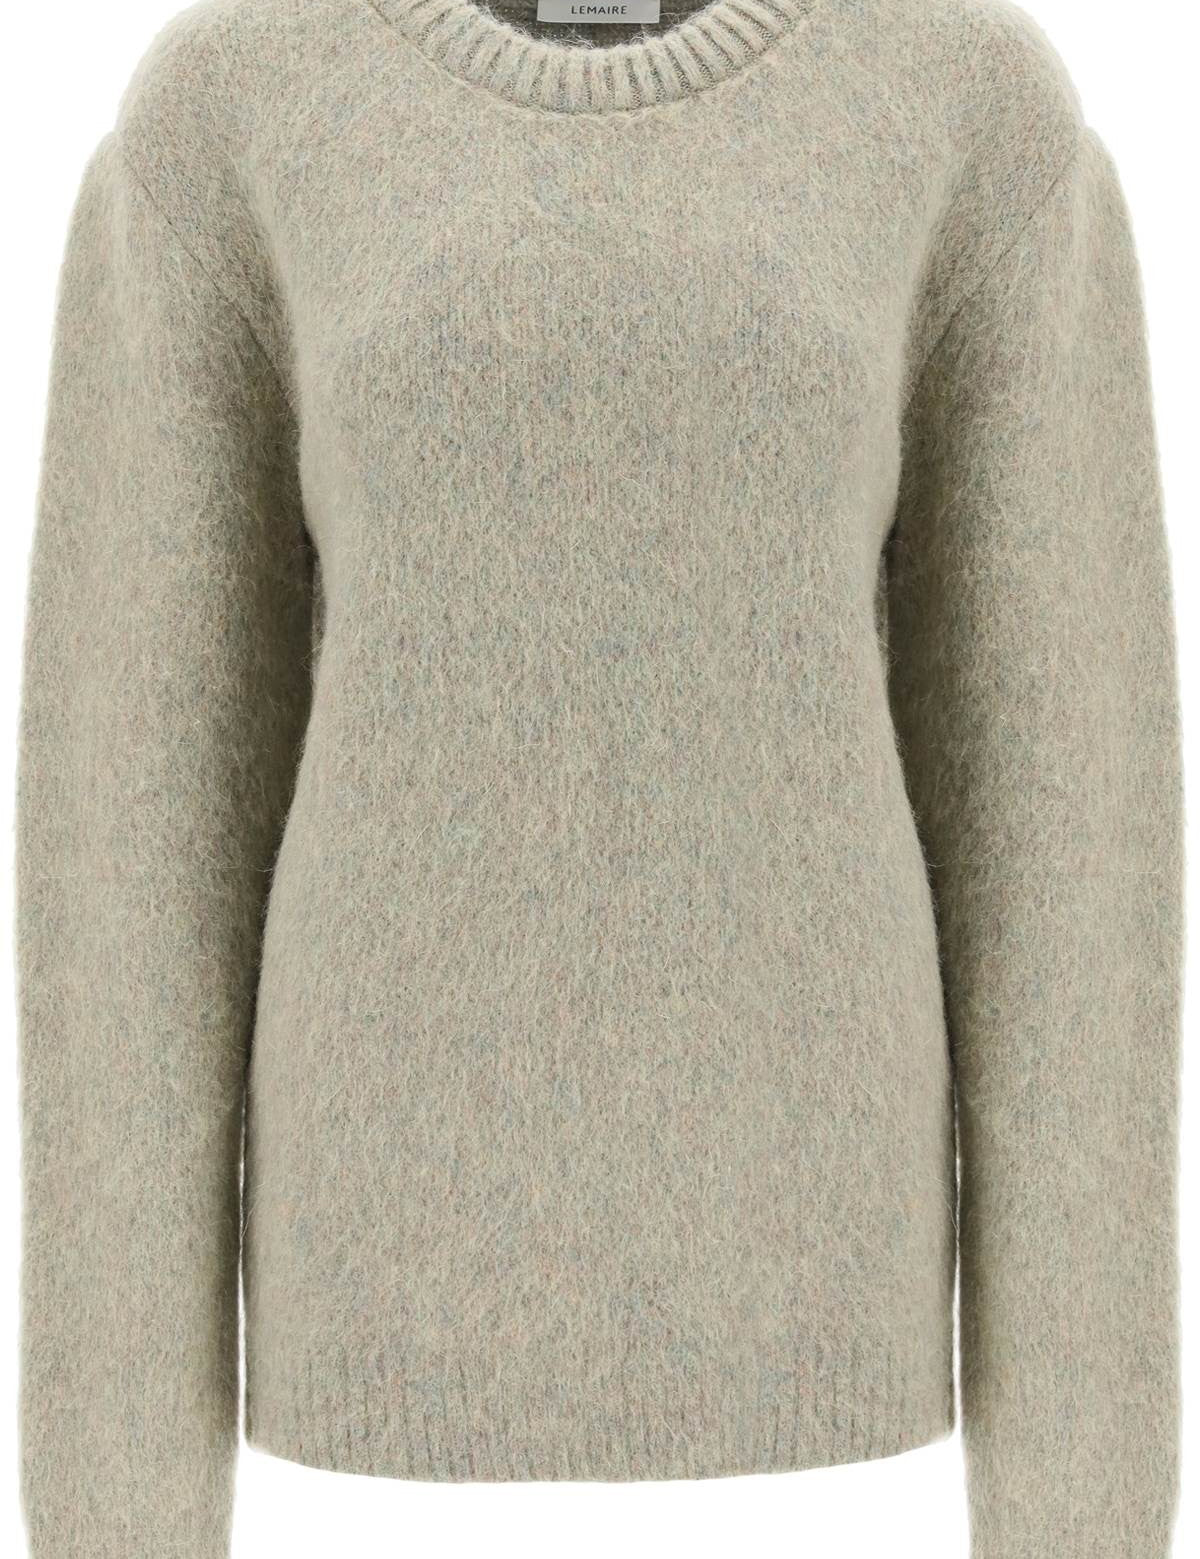 lemaire-sweater-in-melange-effect-brushed-yarn.jpg